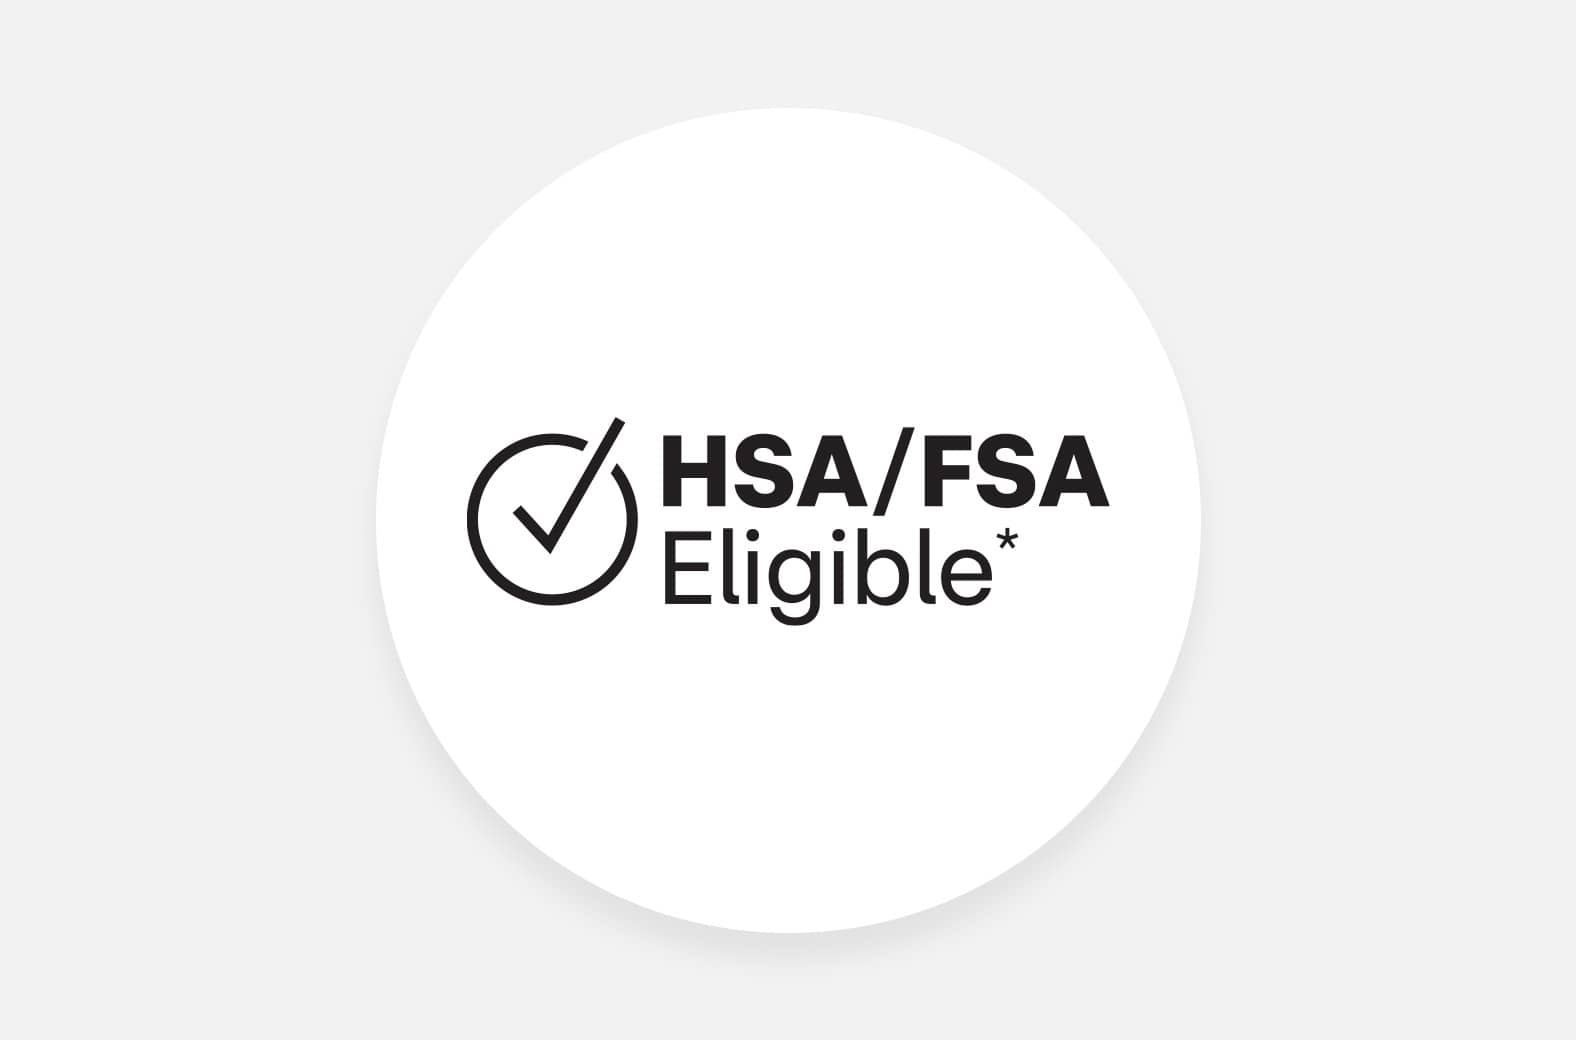 HSA/FSA Eligible logo